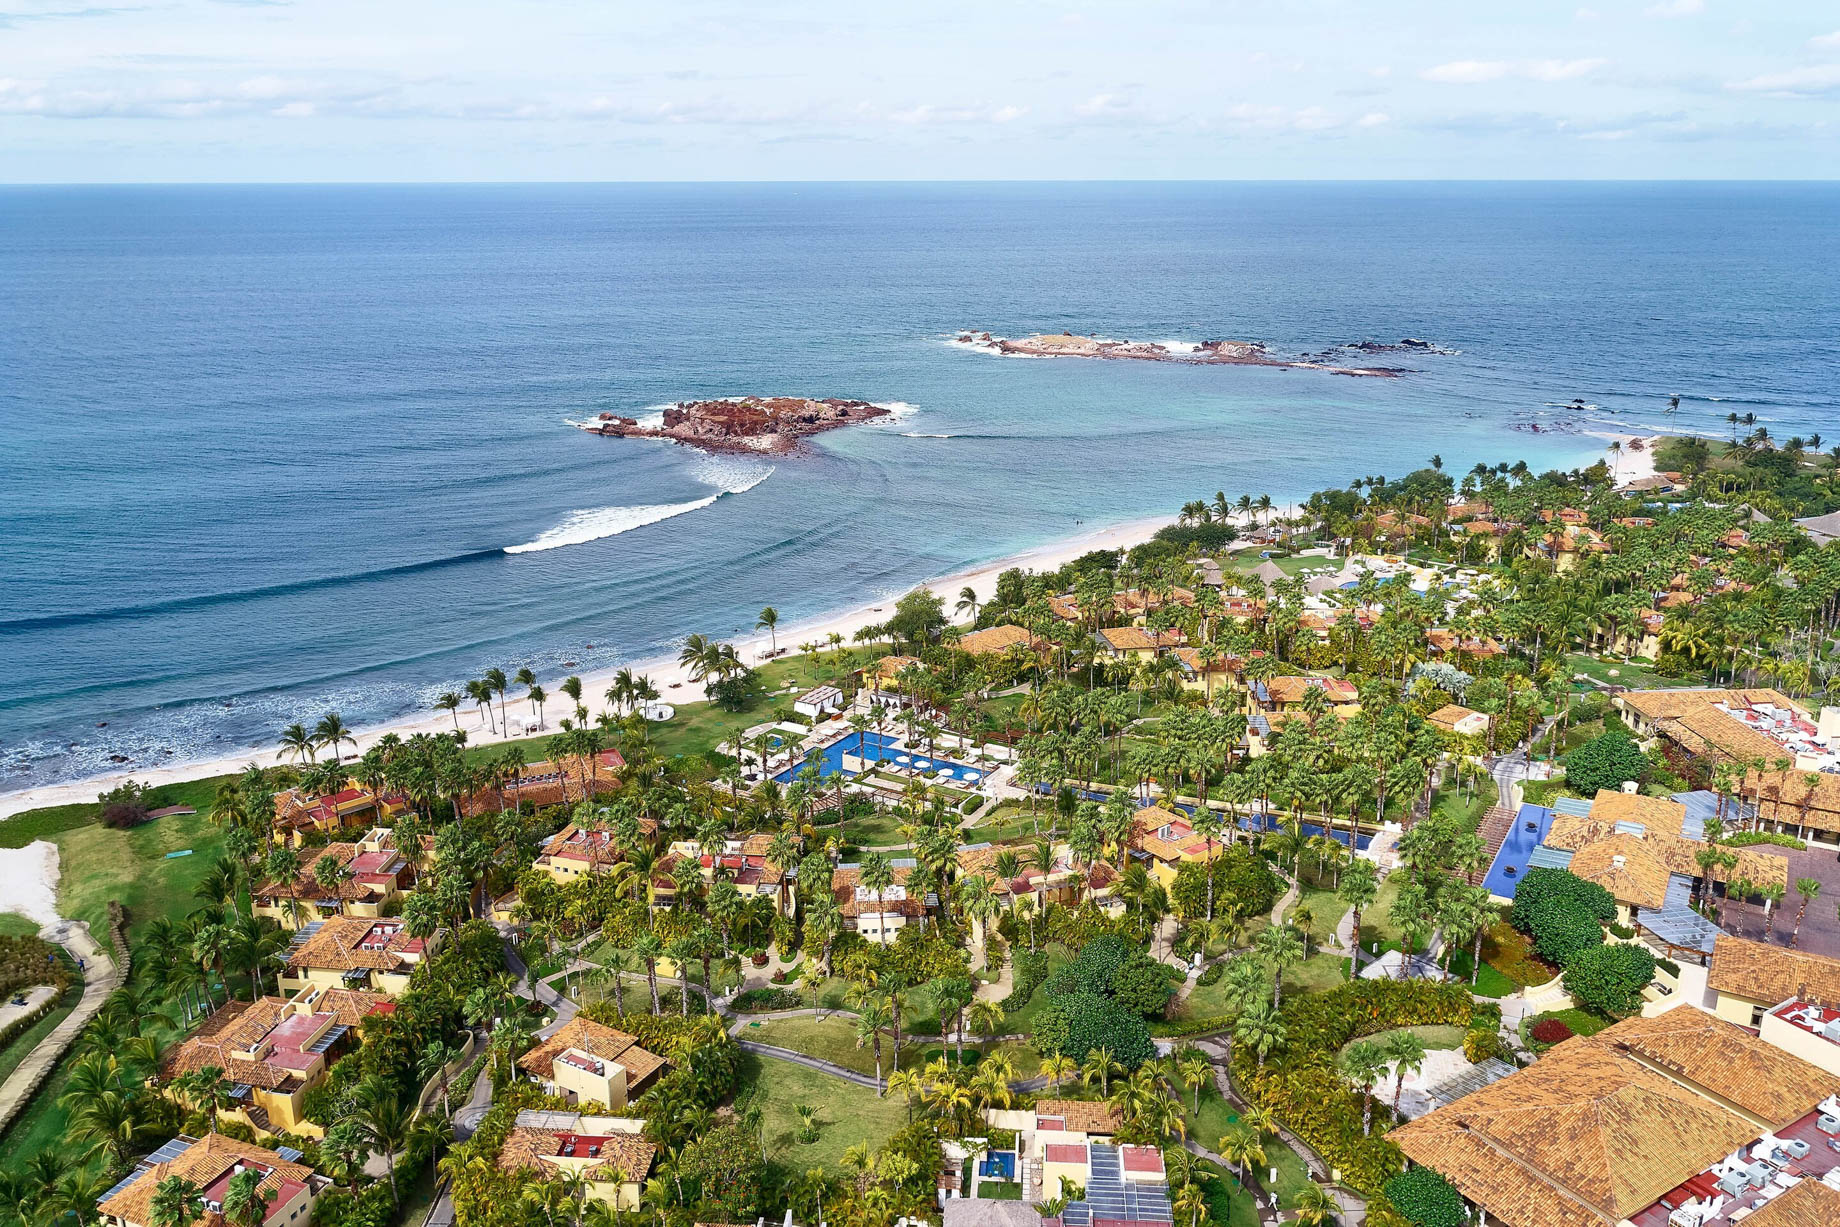 The St. Regis Punta Mita Resort - Nayarit, Mexico - Resort Aerial View